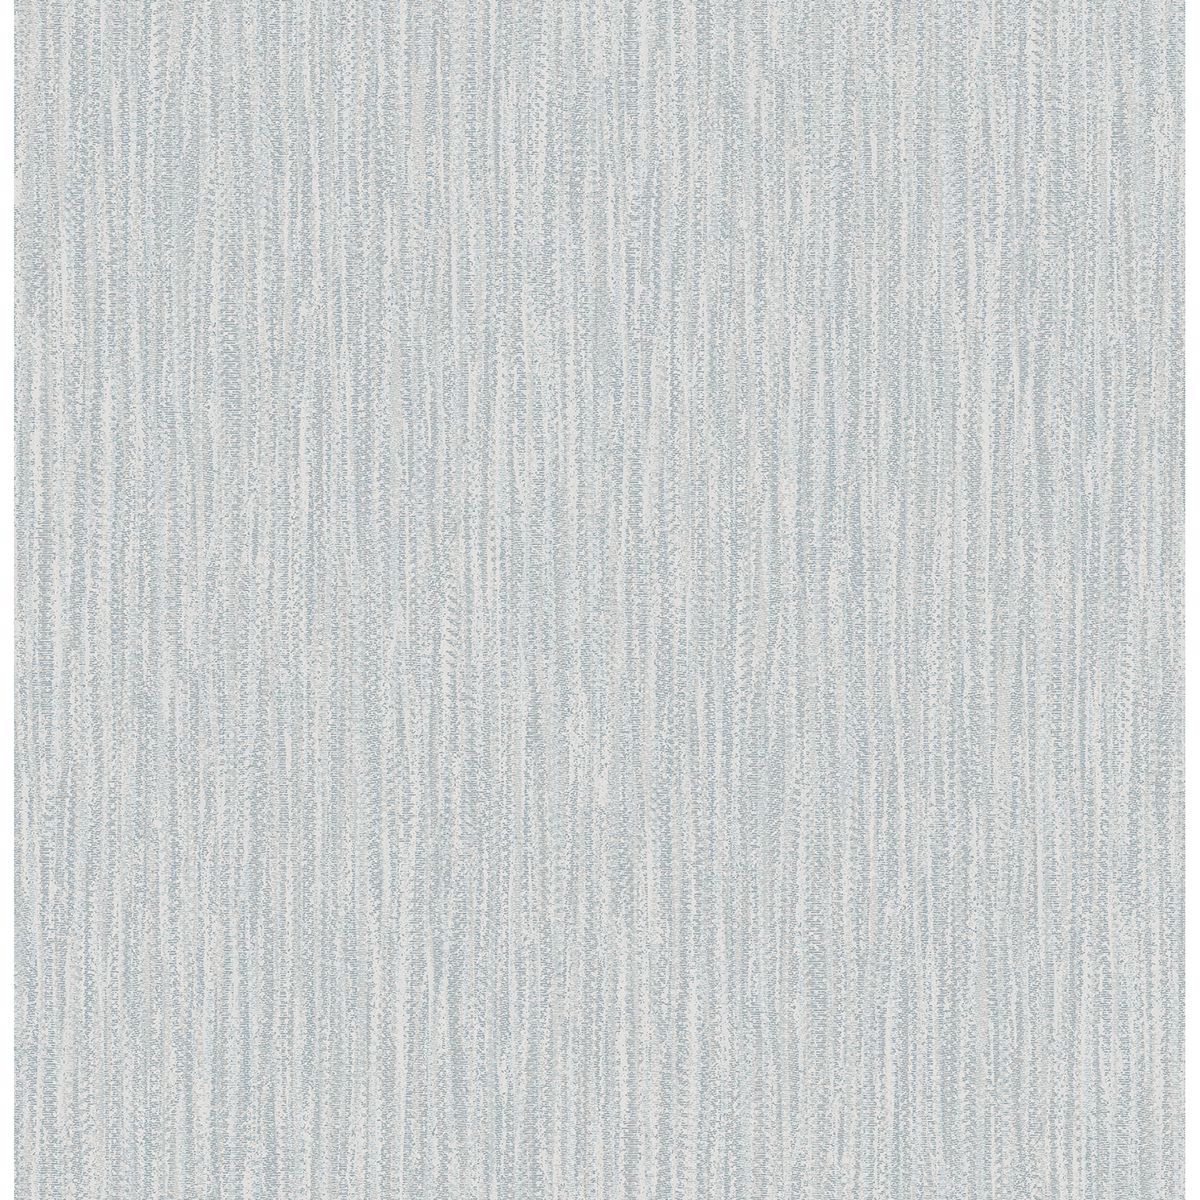 2861-25295 - Raffia Light Blue Faux Grasscloth Wallpaper - by A-Street